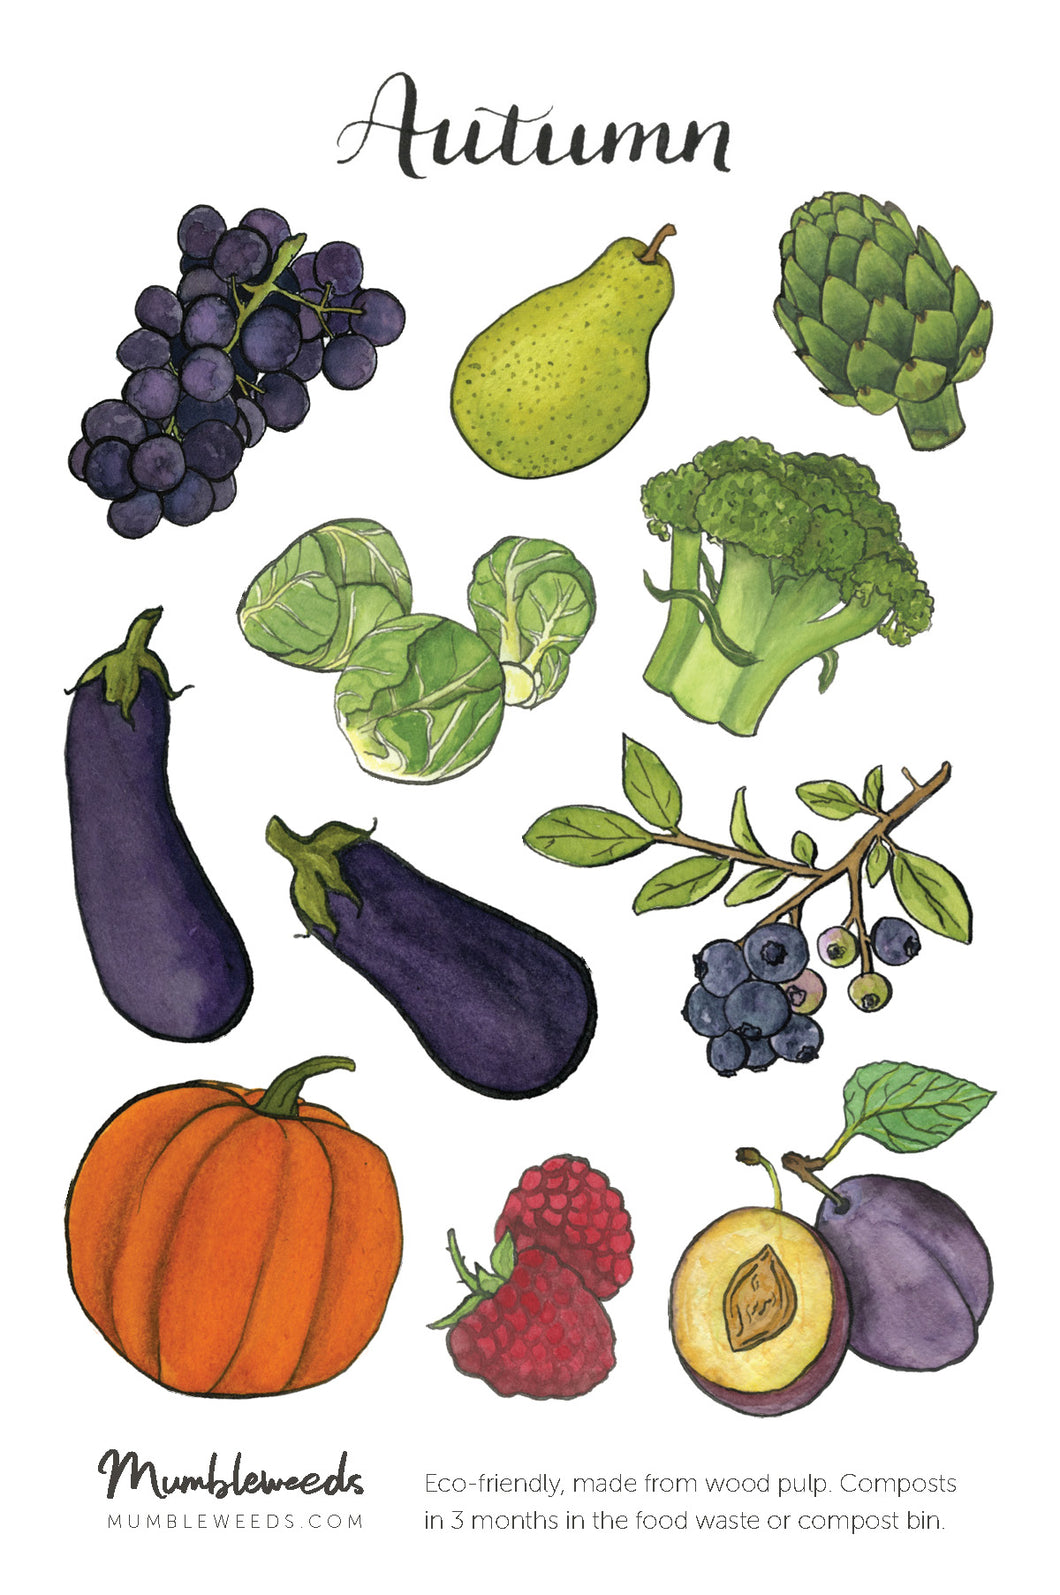 Autumn Produce Sticker Sheet